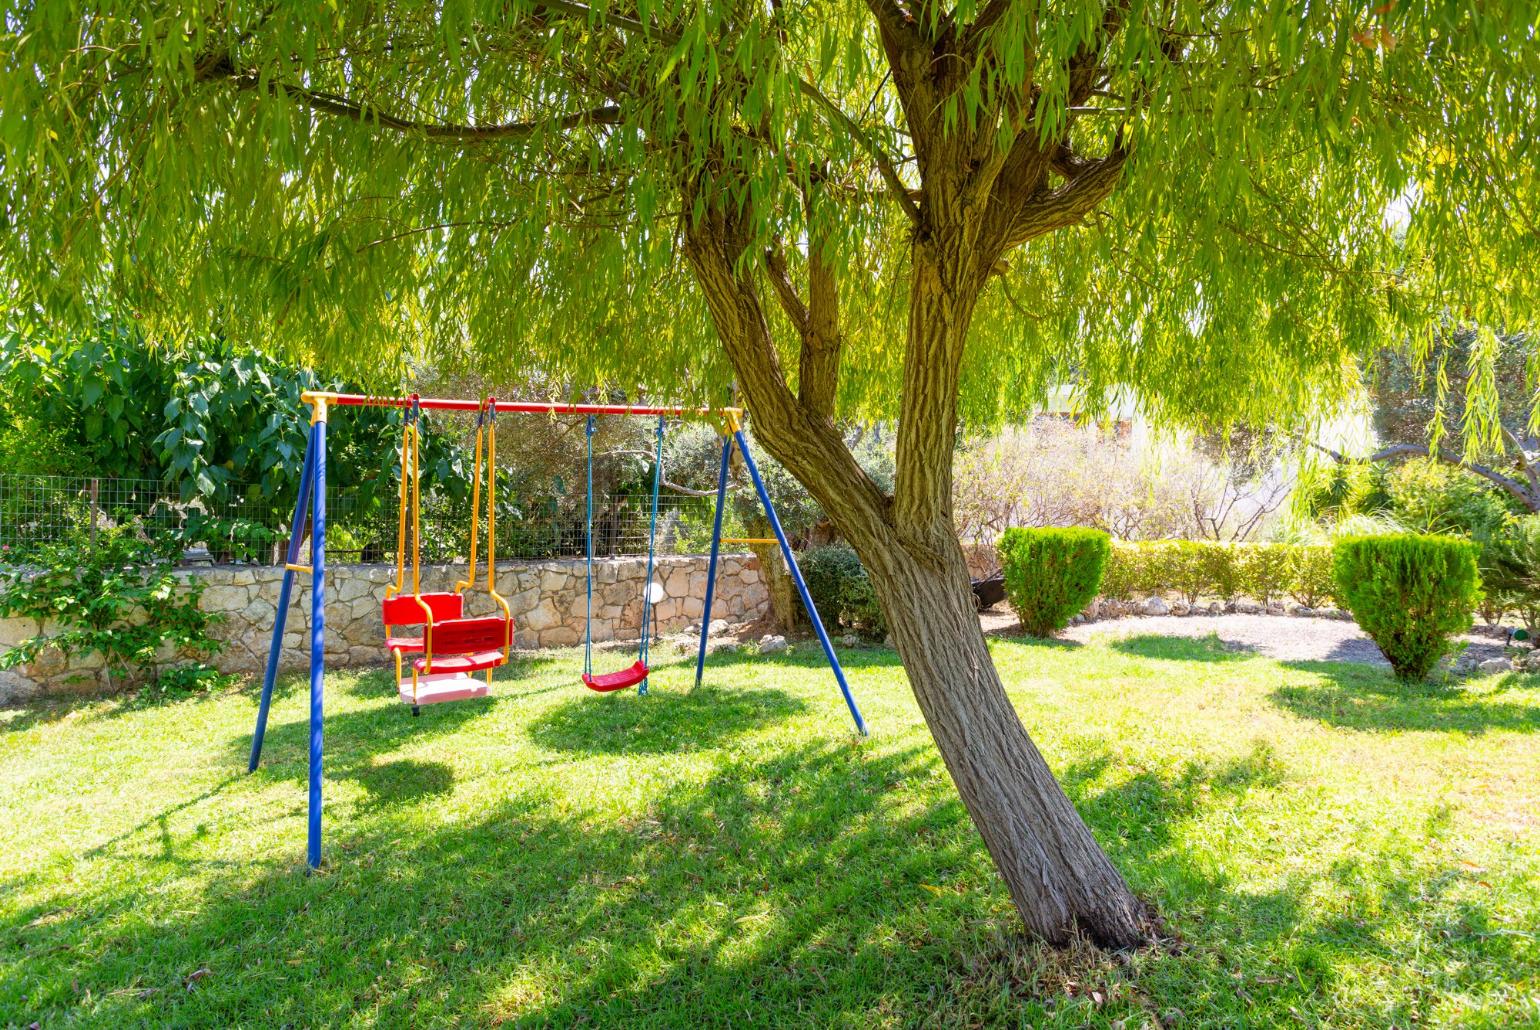 Garden area with swings